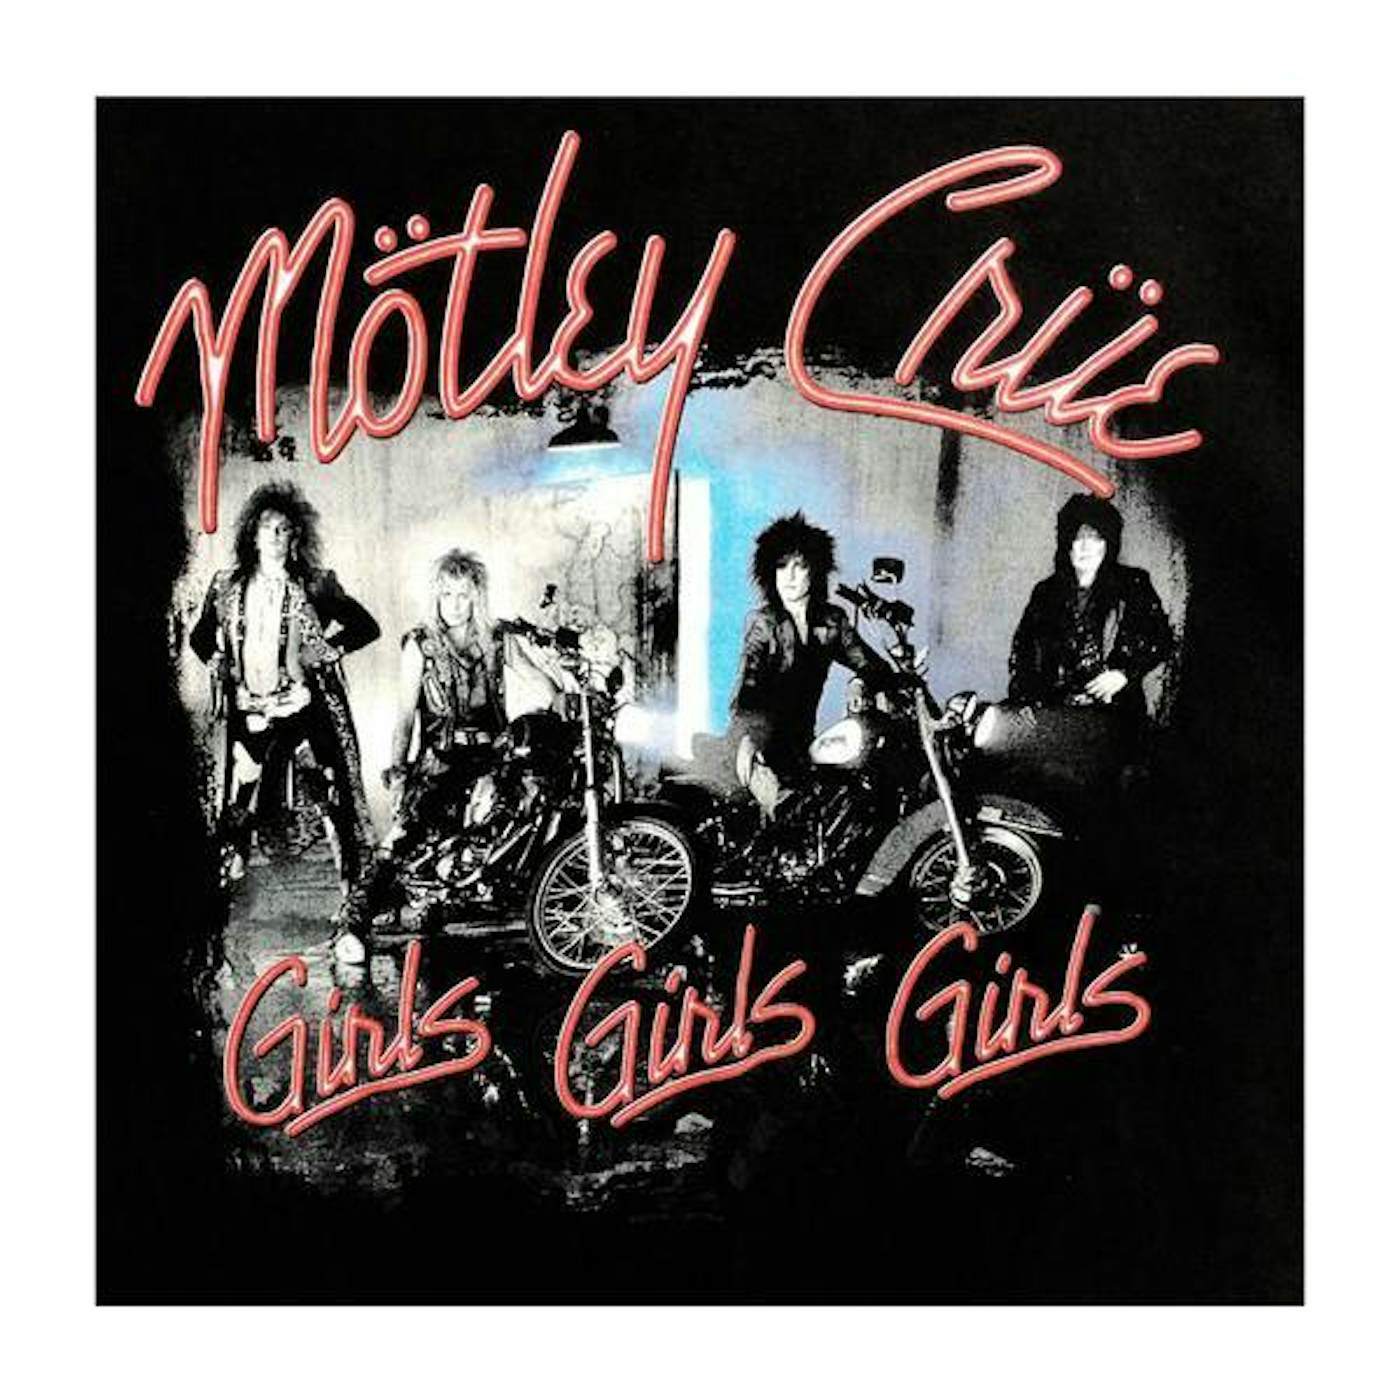 Mötley Crüe - 30 Years of Girls Girls Girls CD DVD